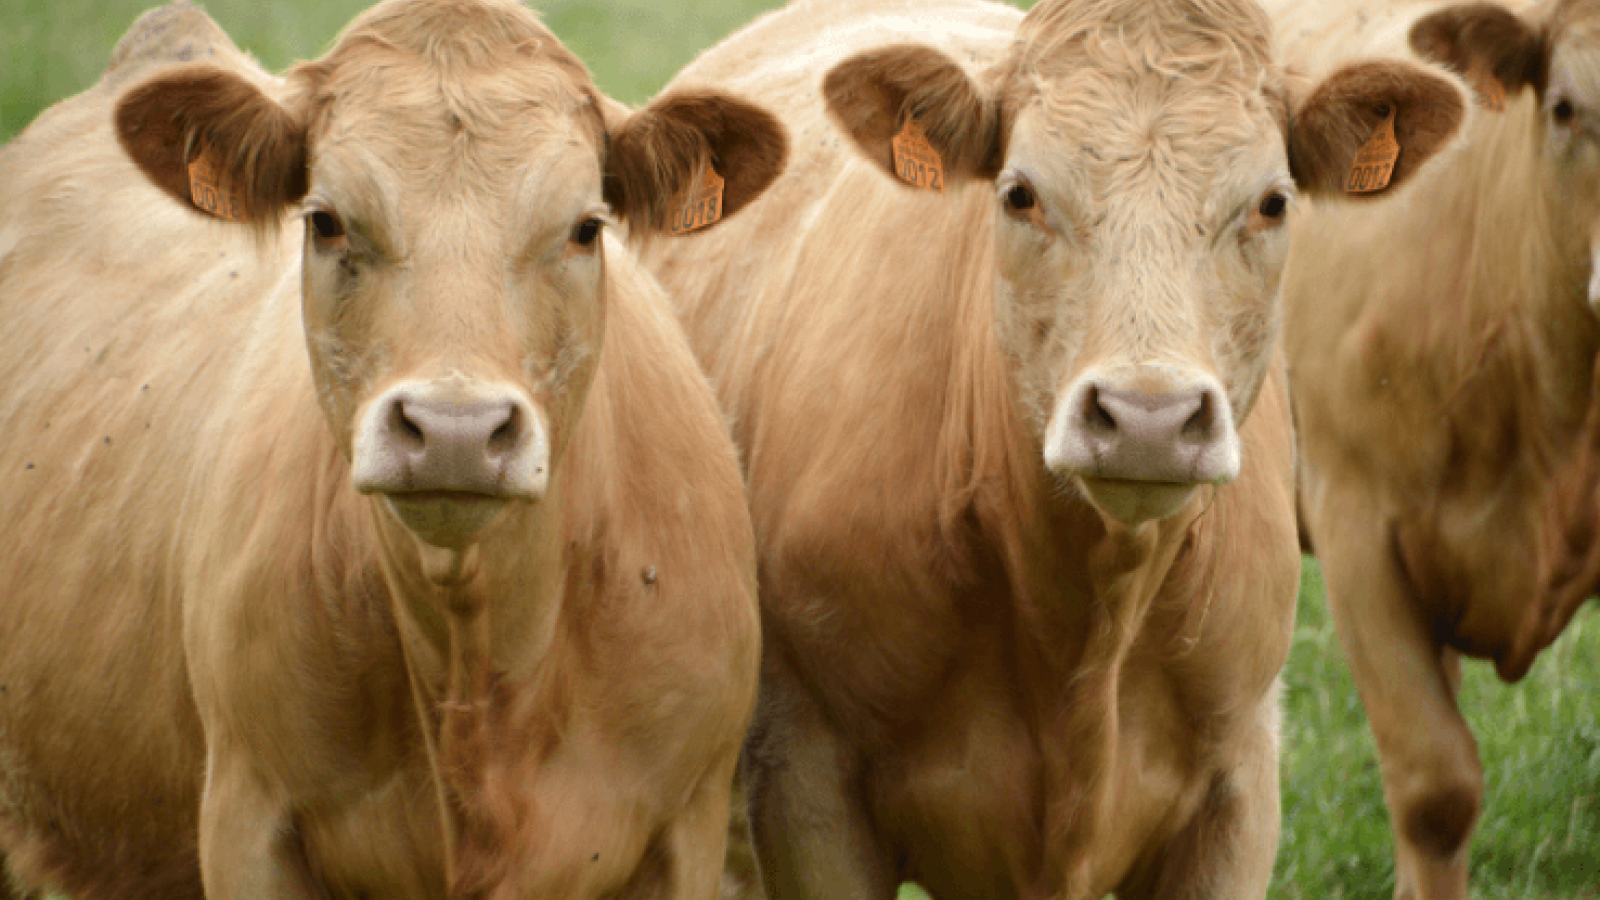 Cattle :: Understanding Animal Research